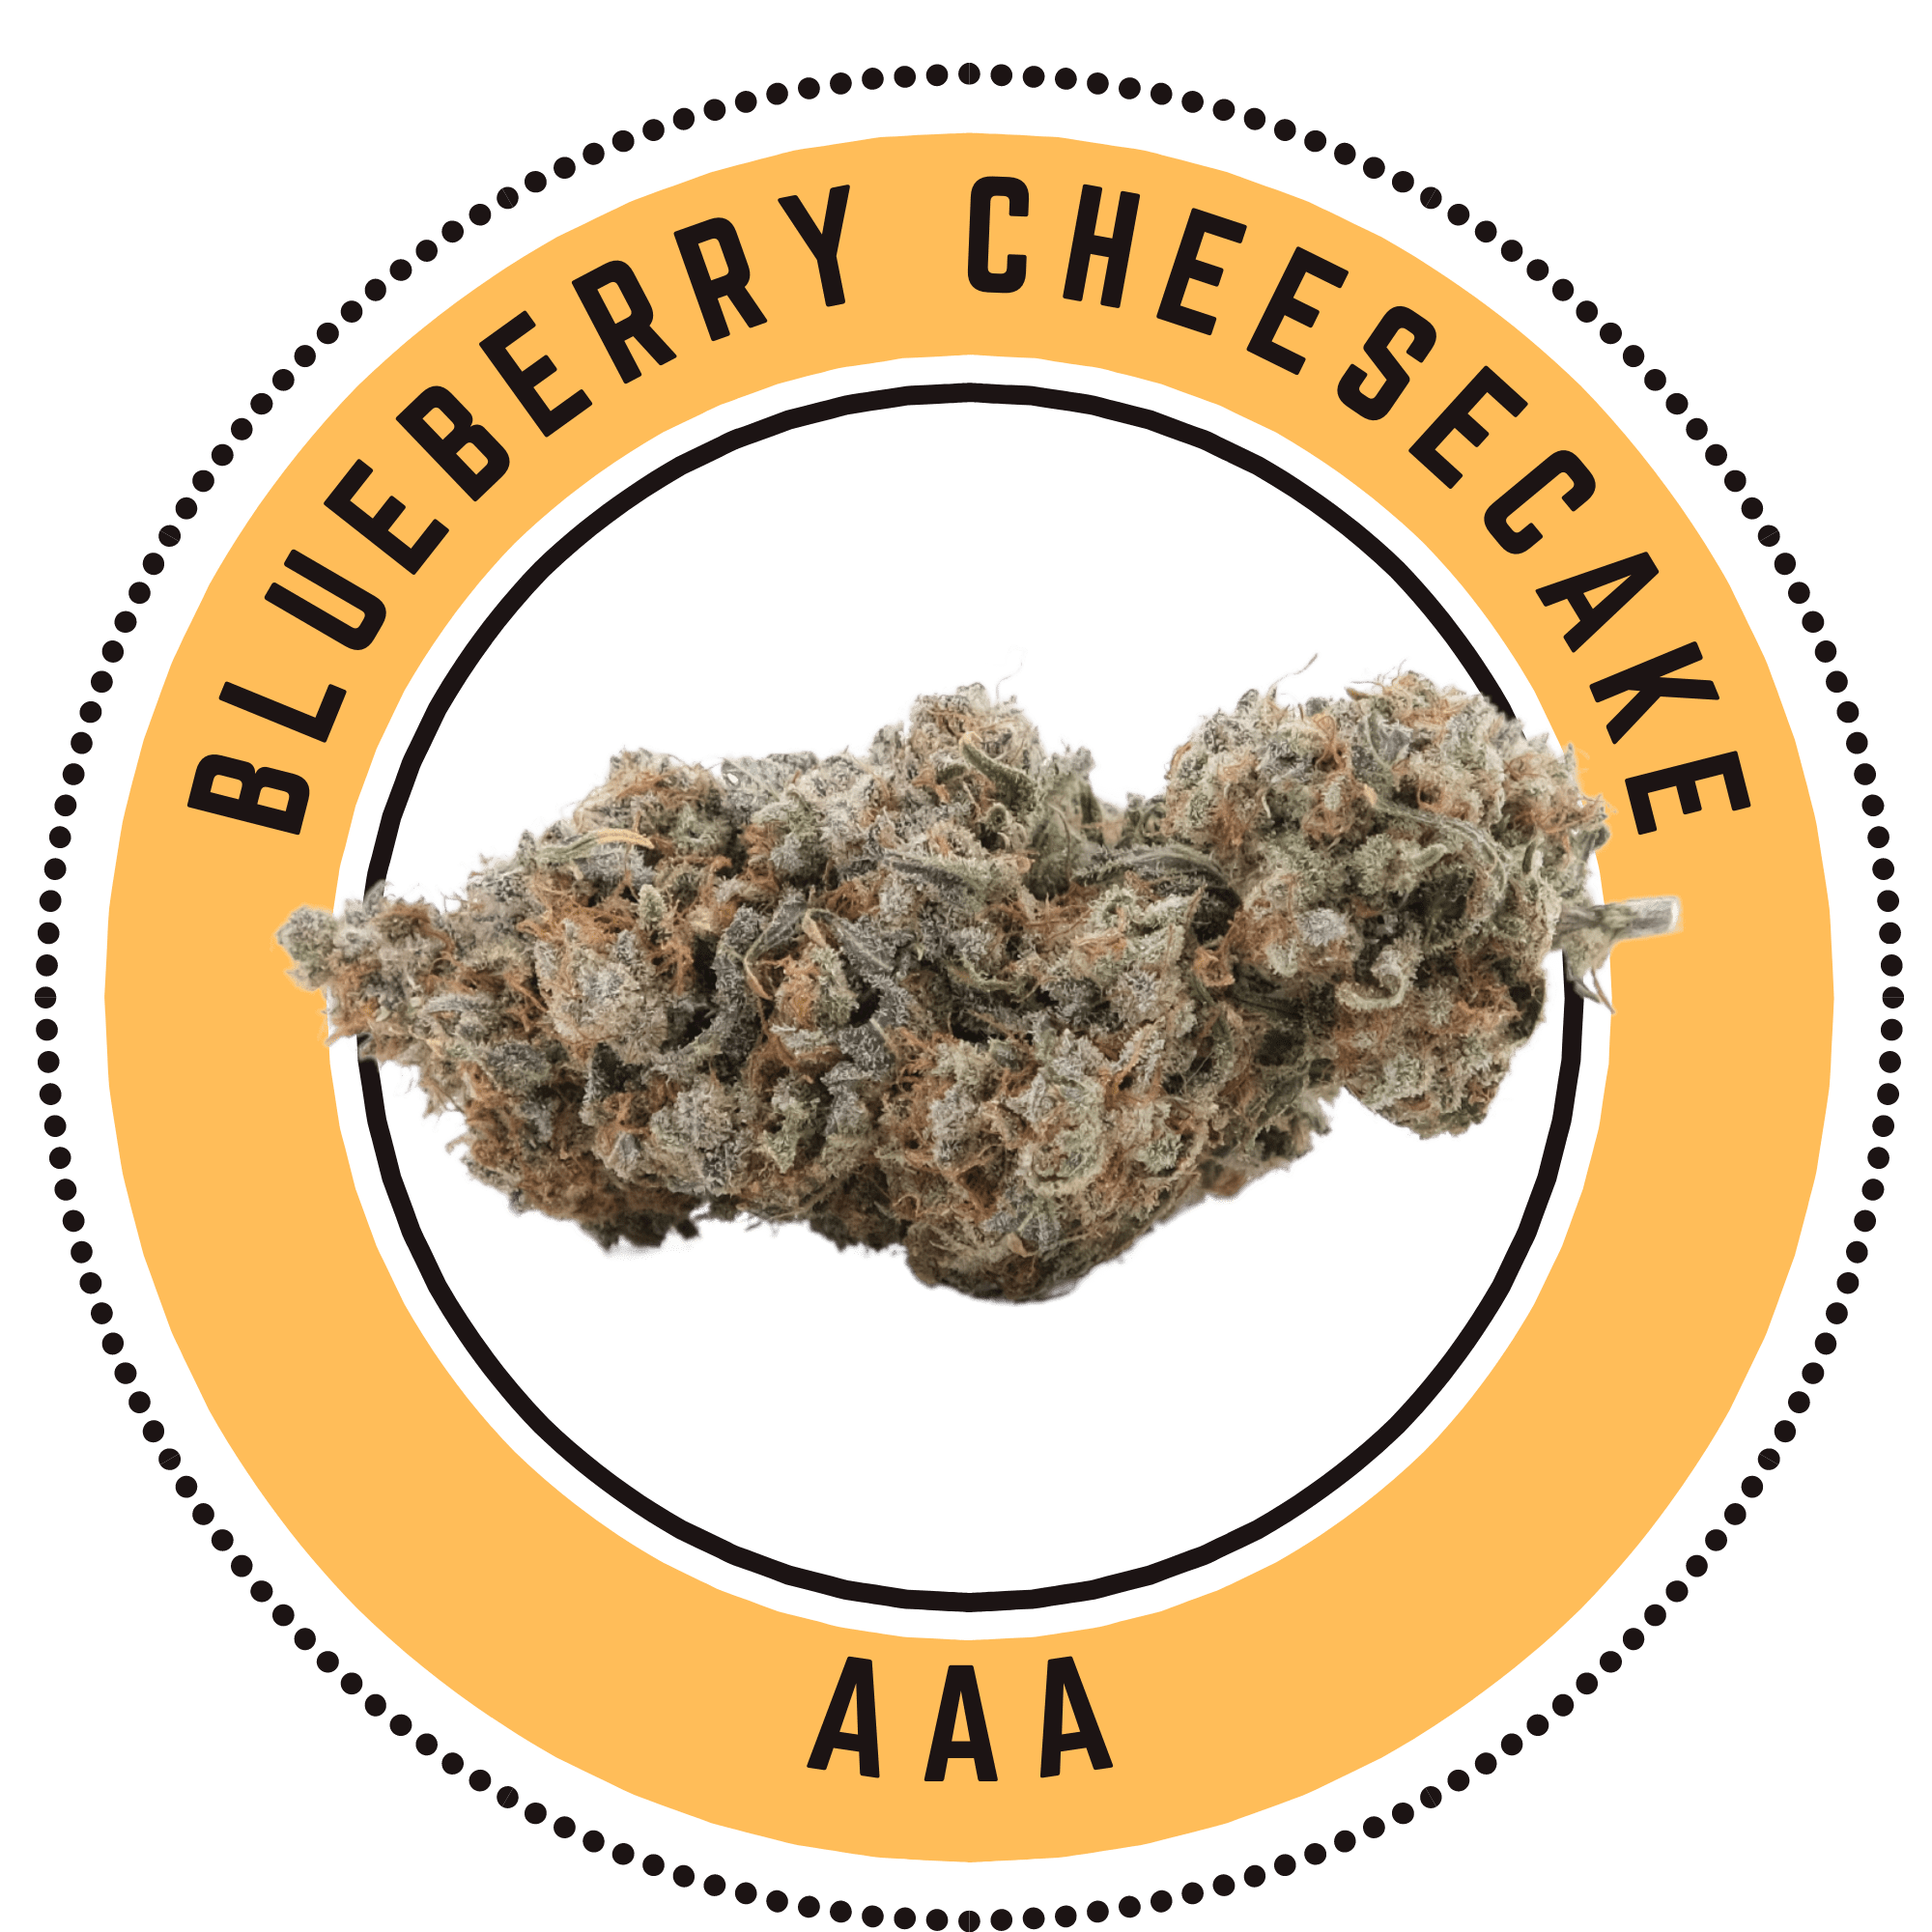 blueberrycheesecake